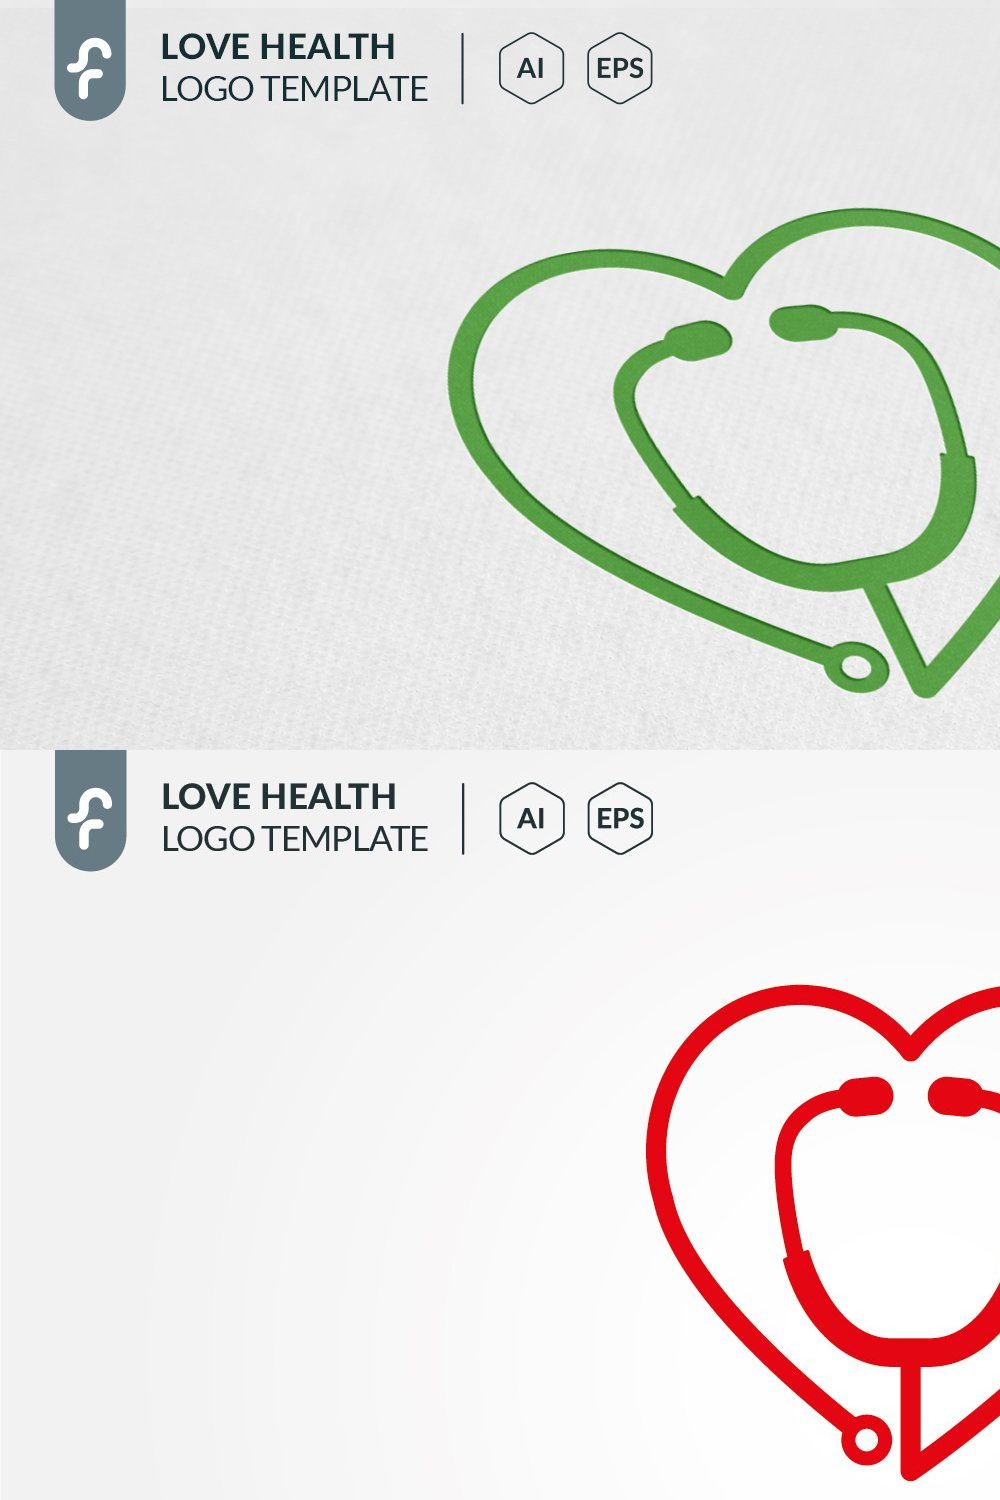 Love Health Logo pinterest preview image.